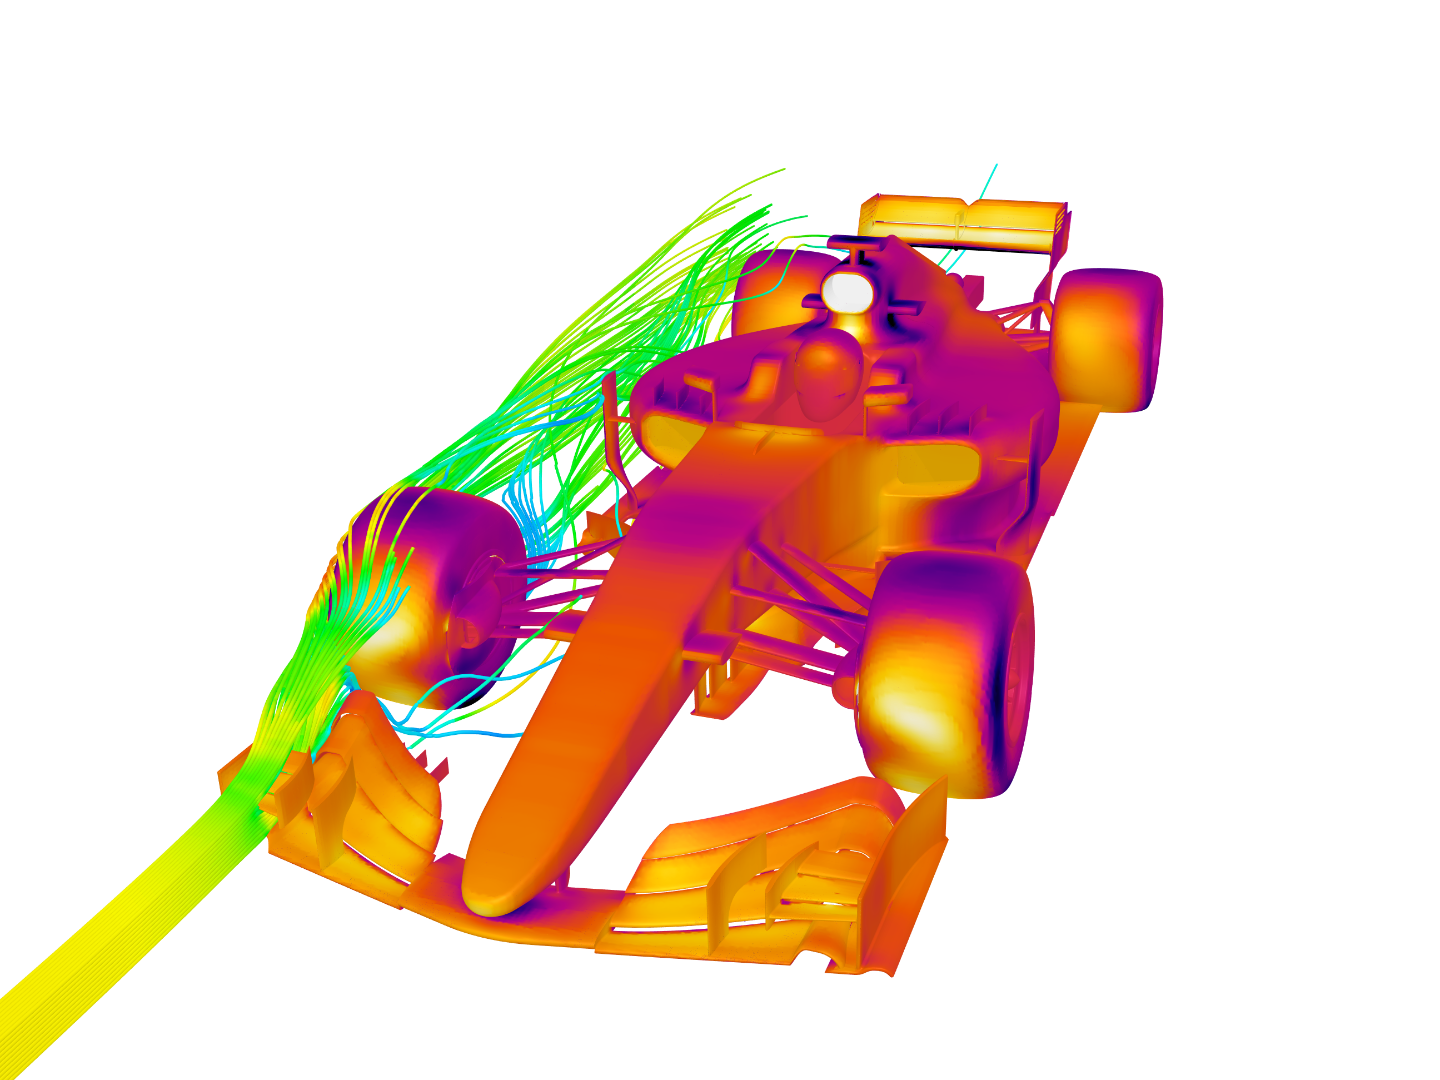 F1 2017 Aero Analysis image